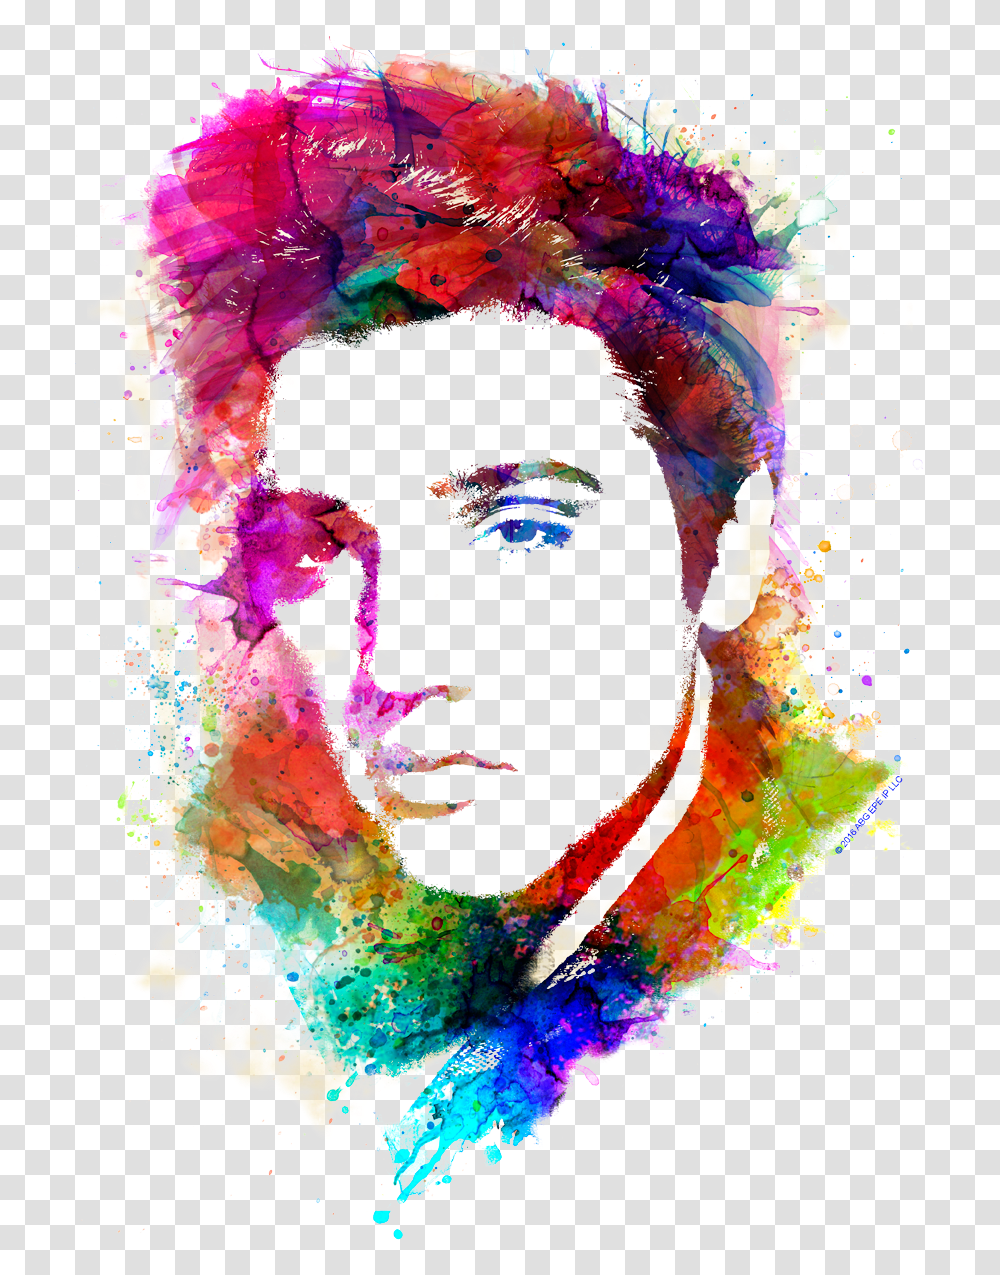 Download Hd Elvis Presley Watercolor Elvis Presley Watercolor, Modern Art, Graphics, Painting, Canvas Transparent Png